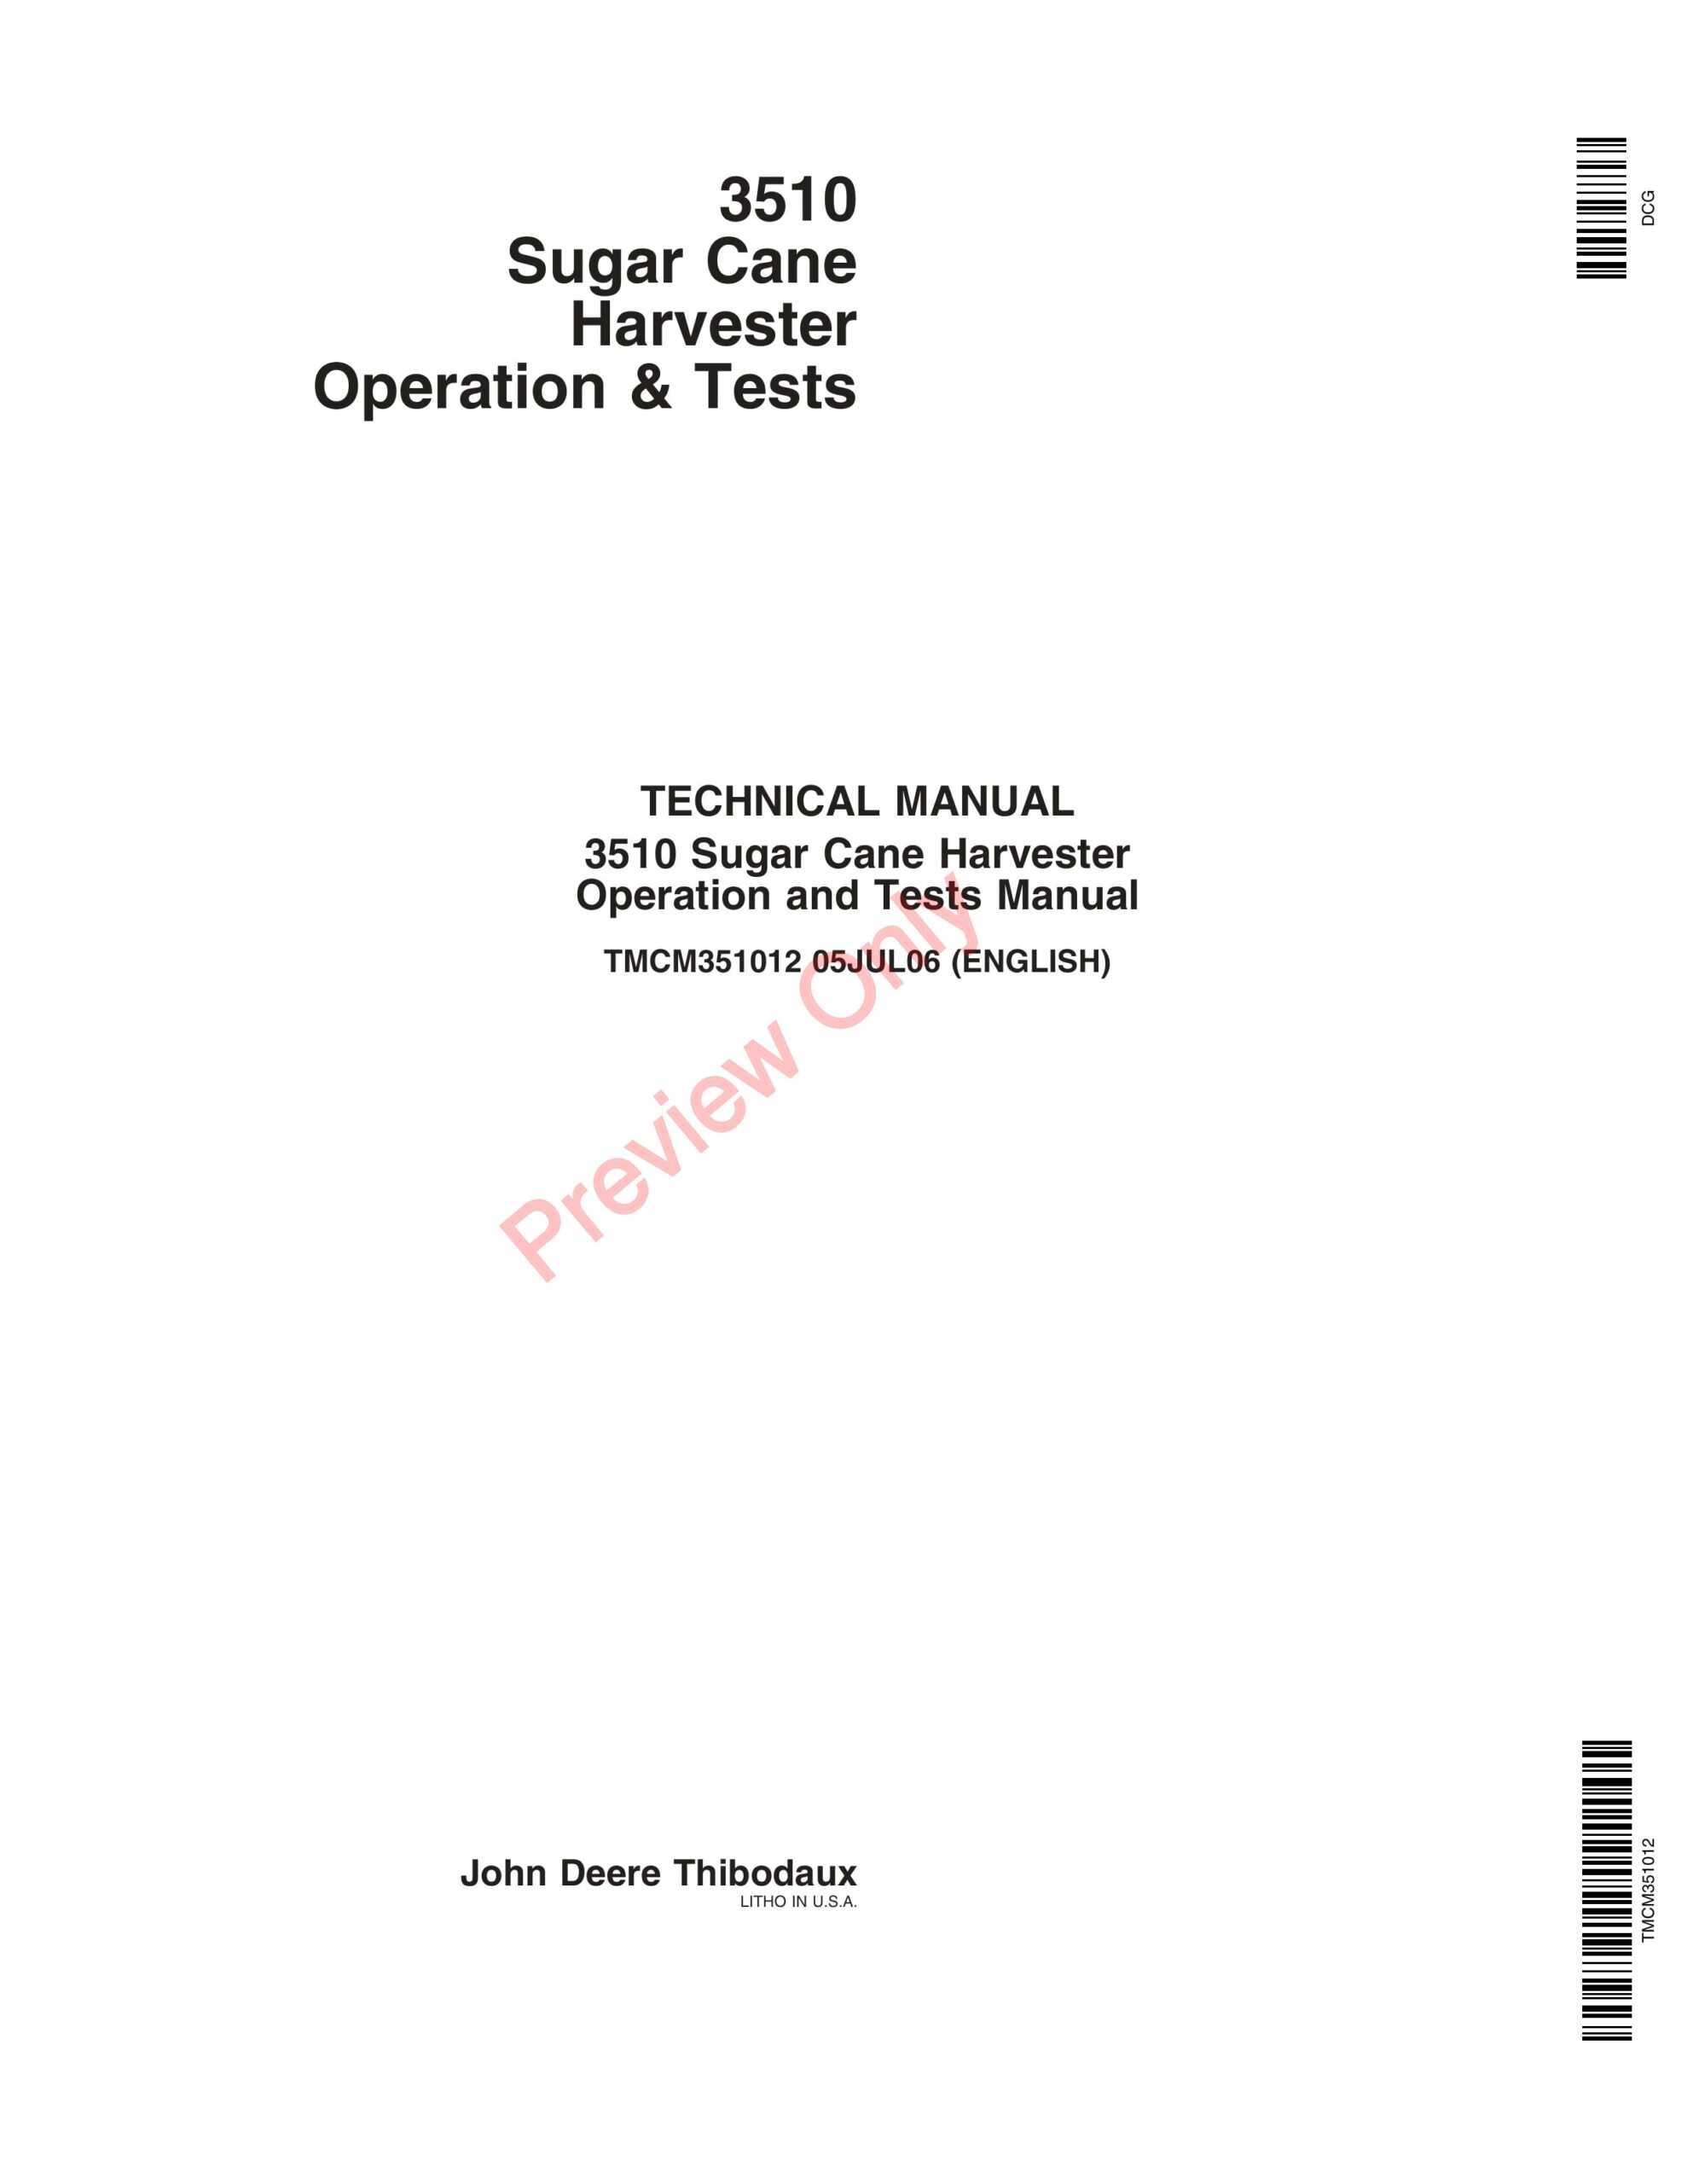 John Deere Harvester 3510 Sugar Cane Technical Manual TMCM351012 05JUL06-1